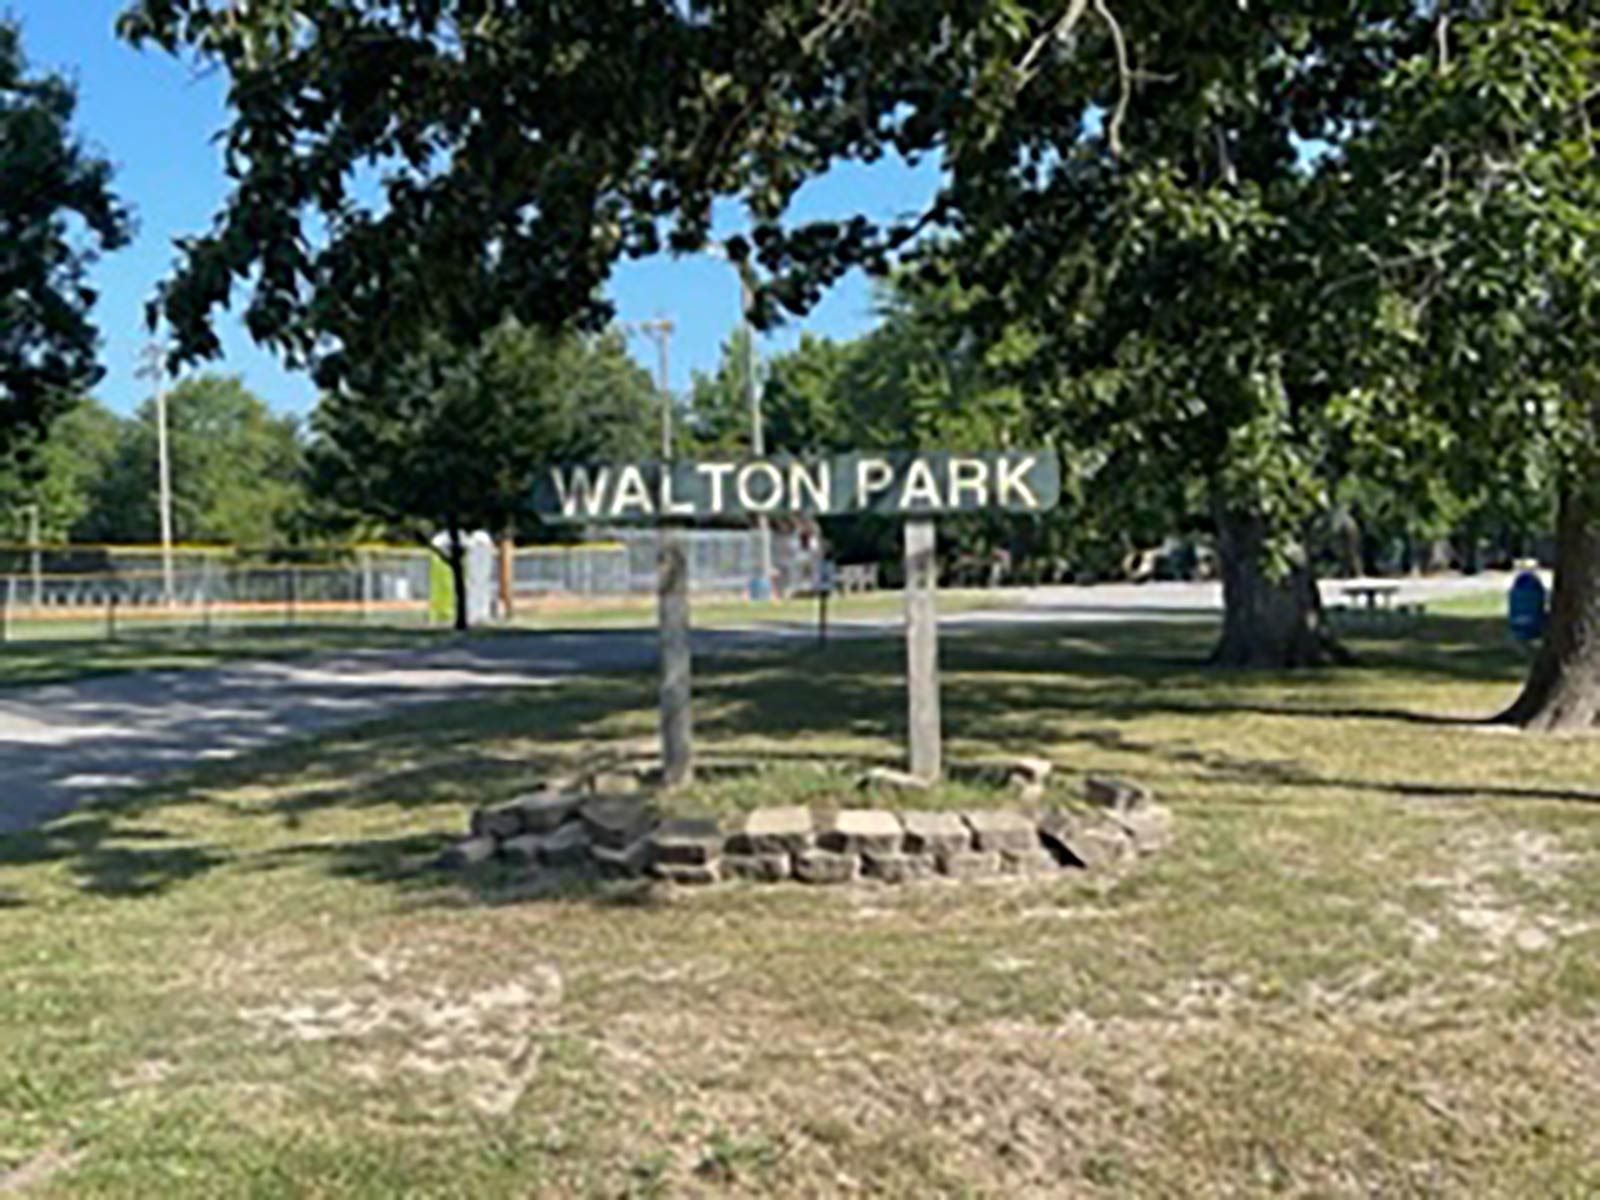 Walton Park welcome sign